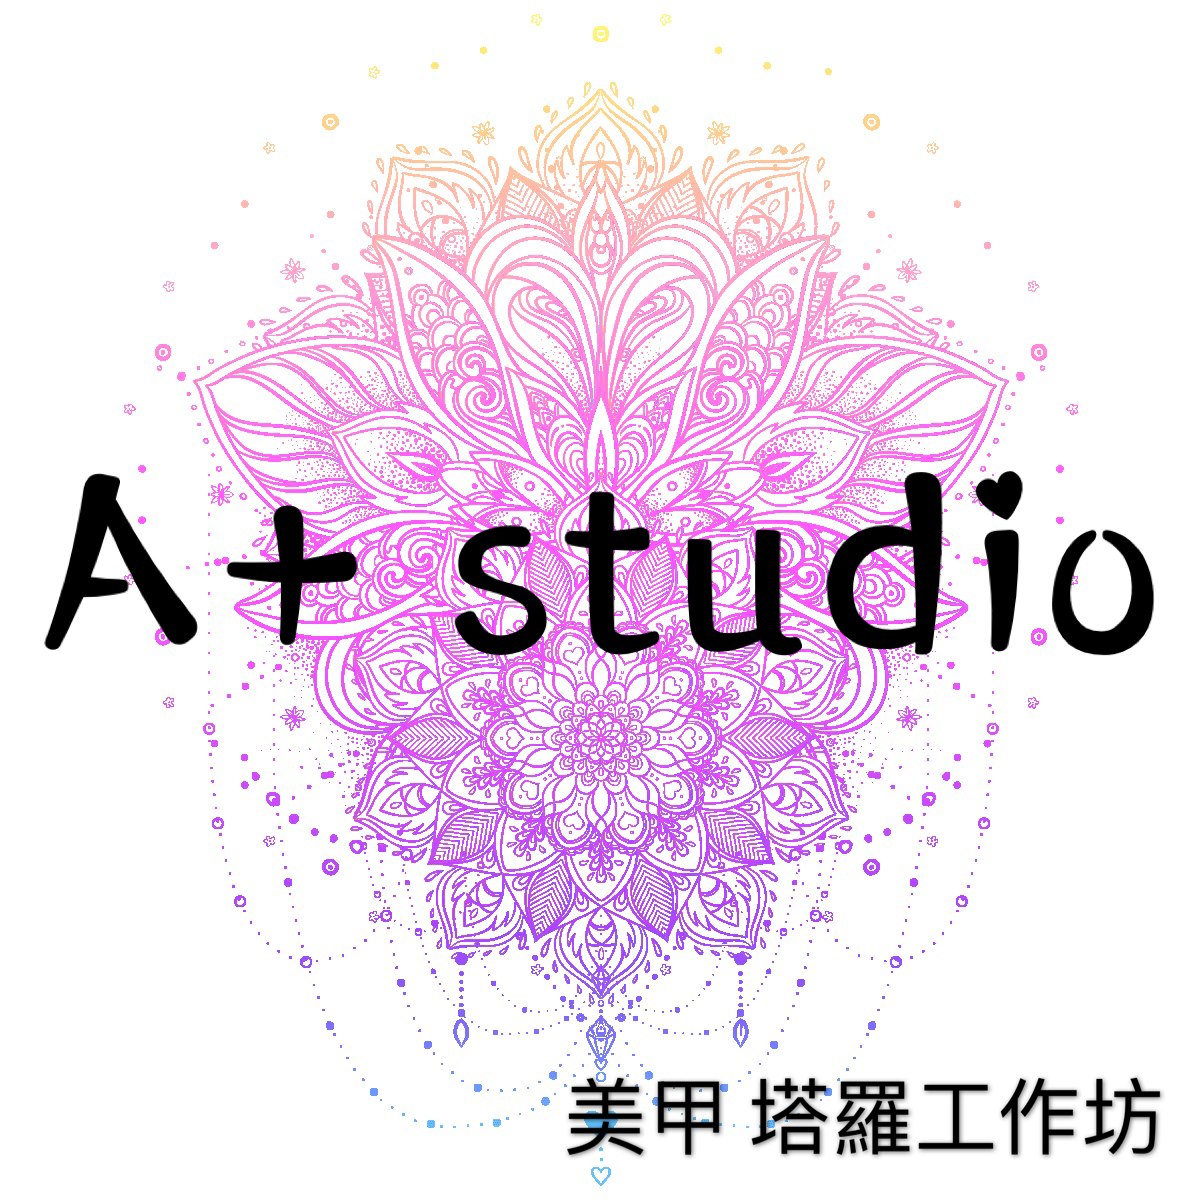 A+ Studio